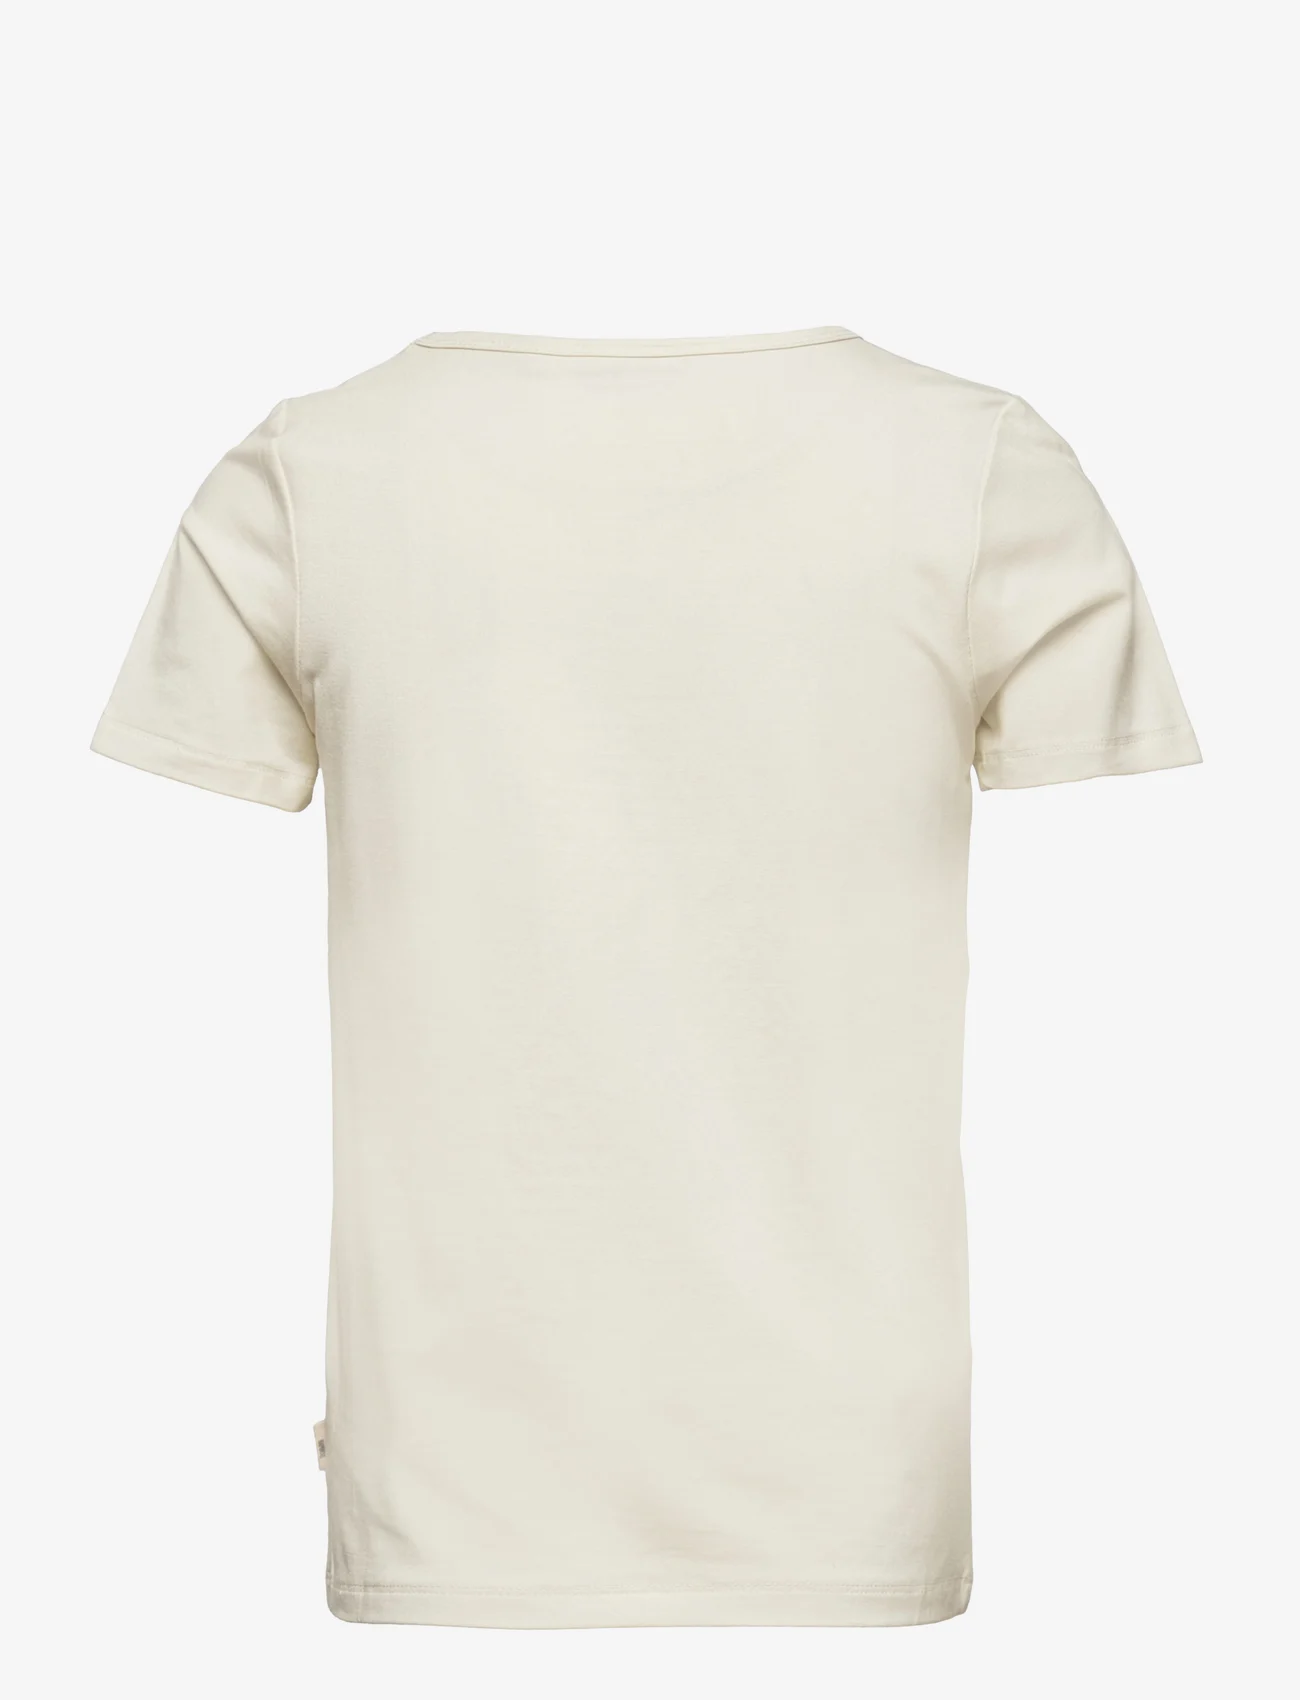 Minymo - Blouse SS - Bamboo - short-sleeved t-shirts - white - 1